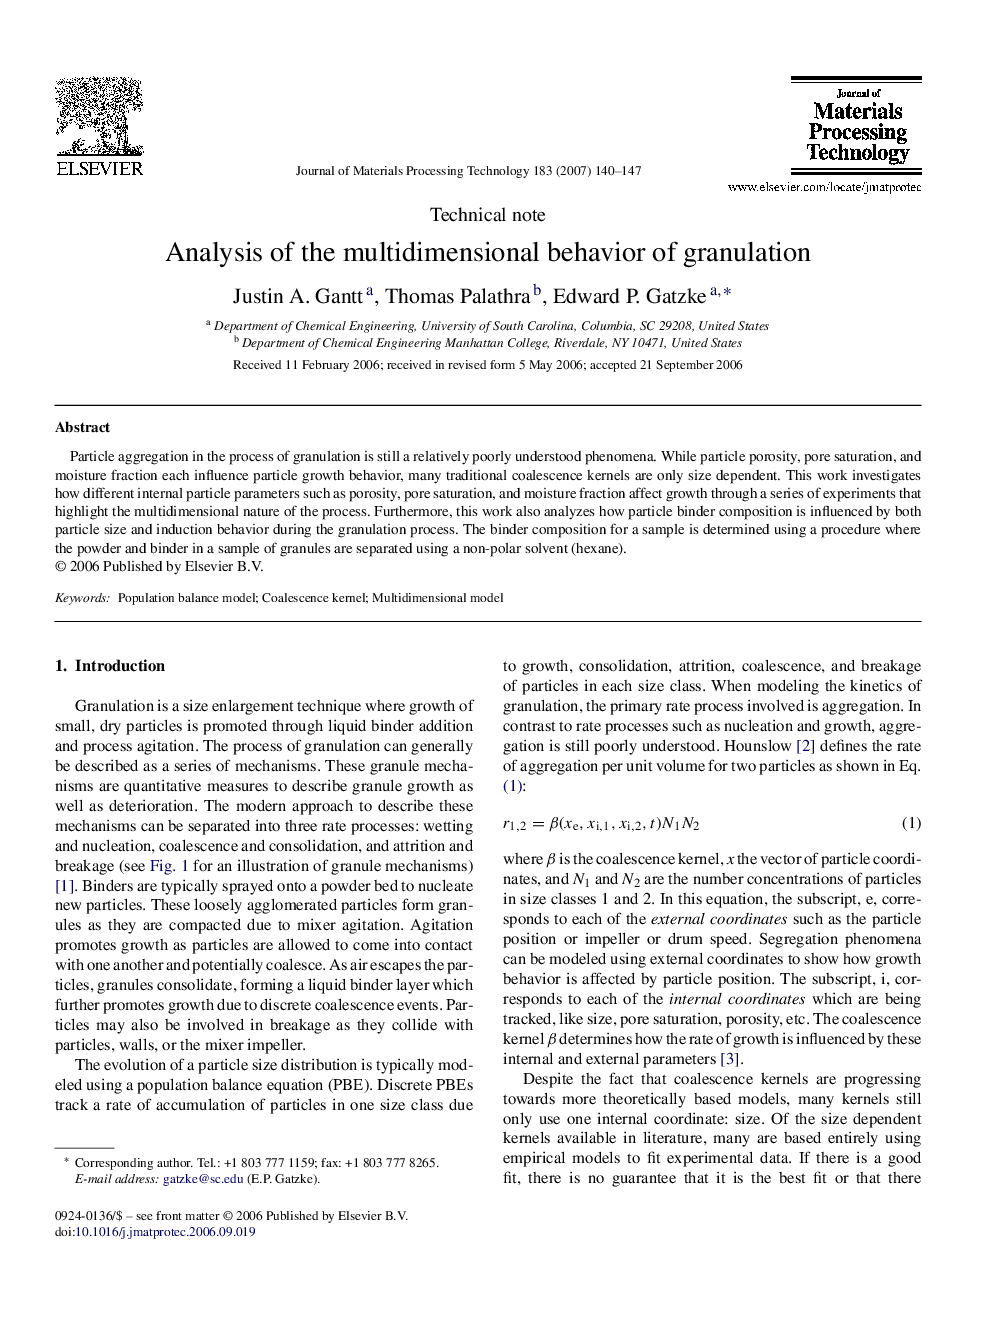 Analysis of the multidimensional behavior of granulation